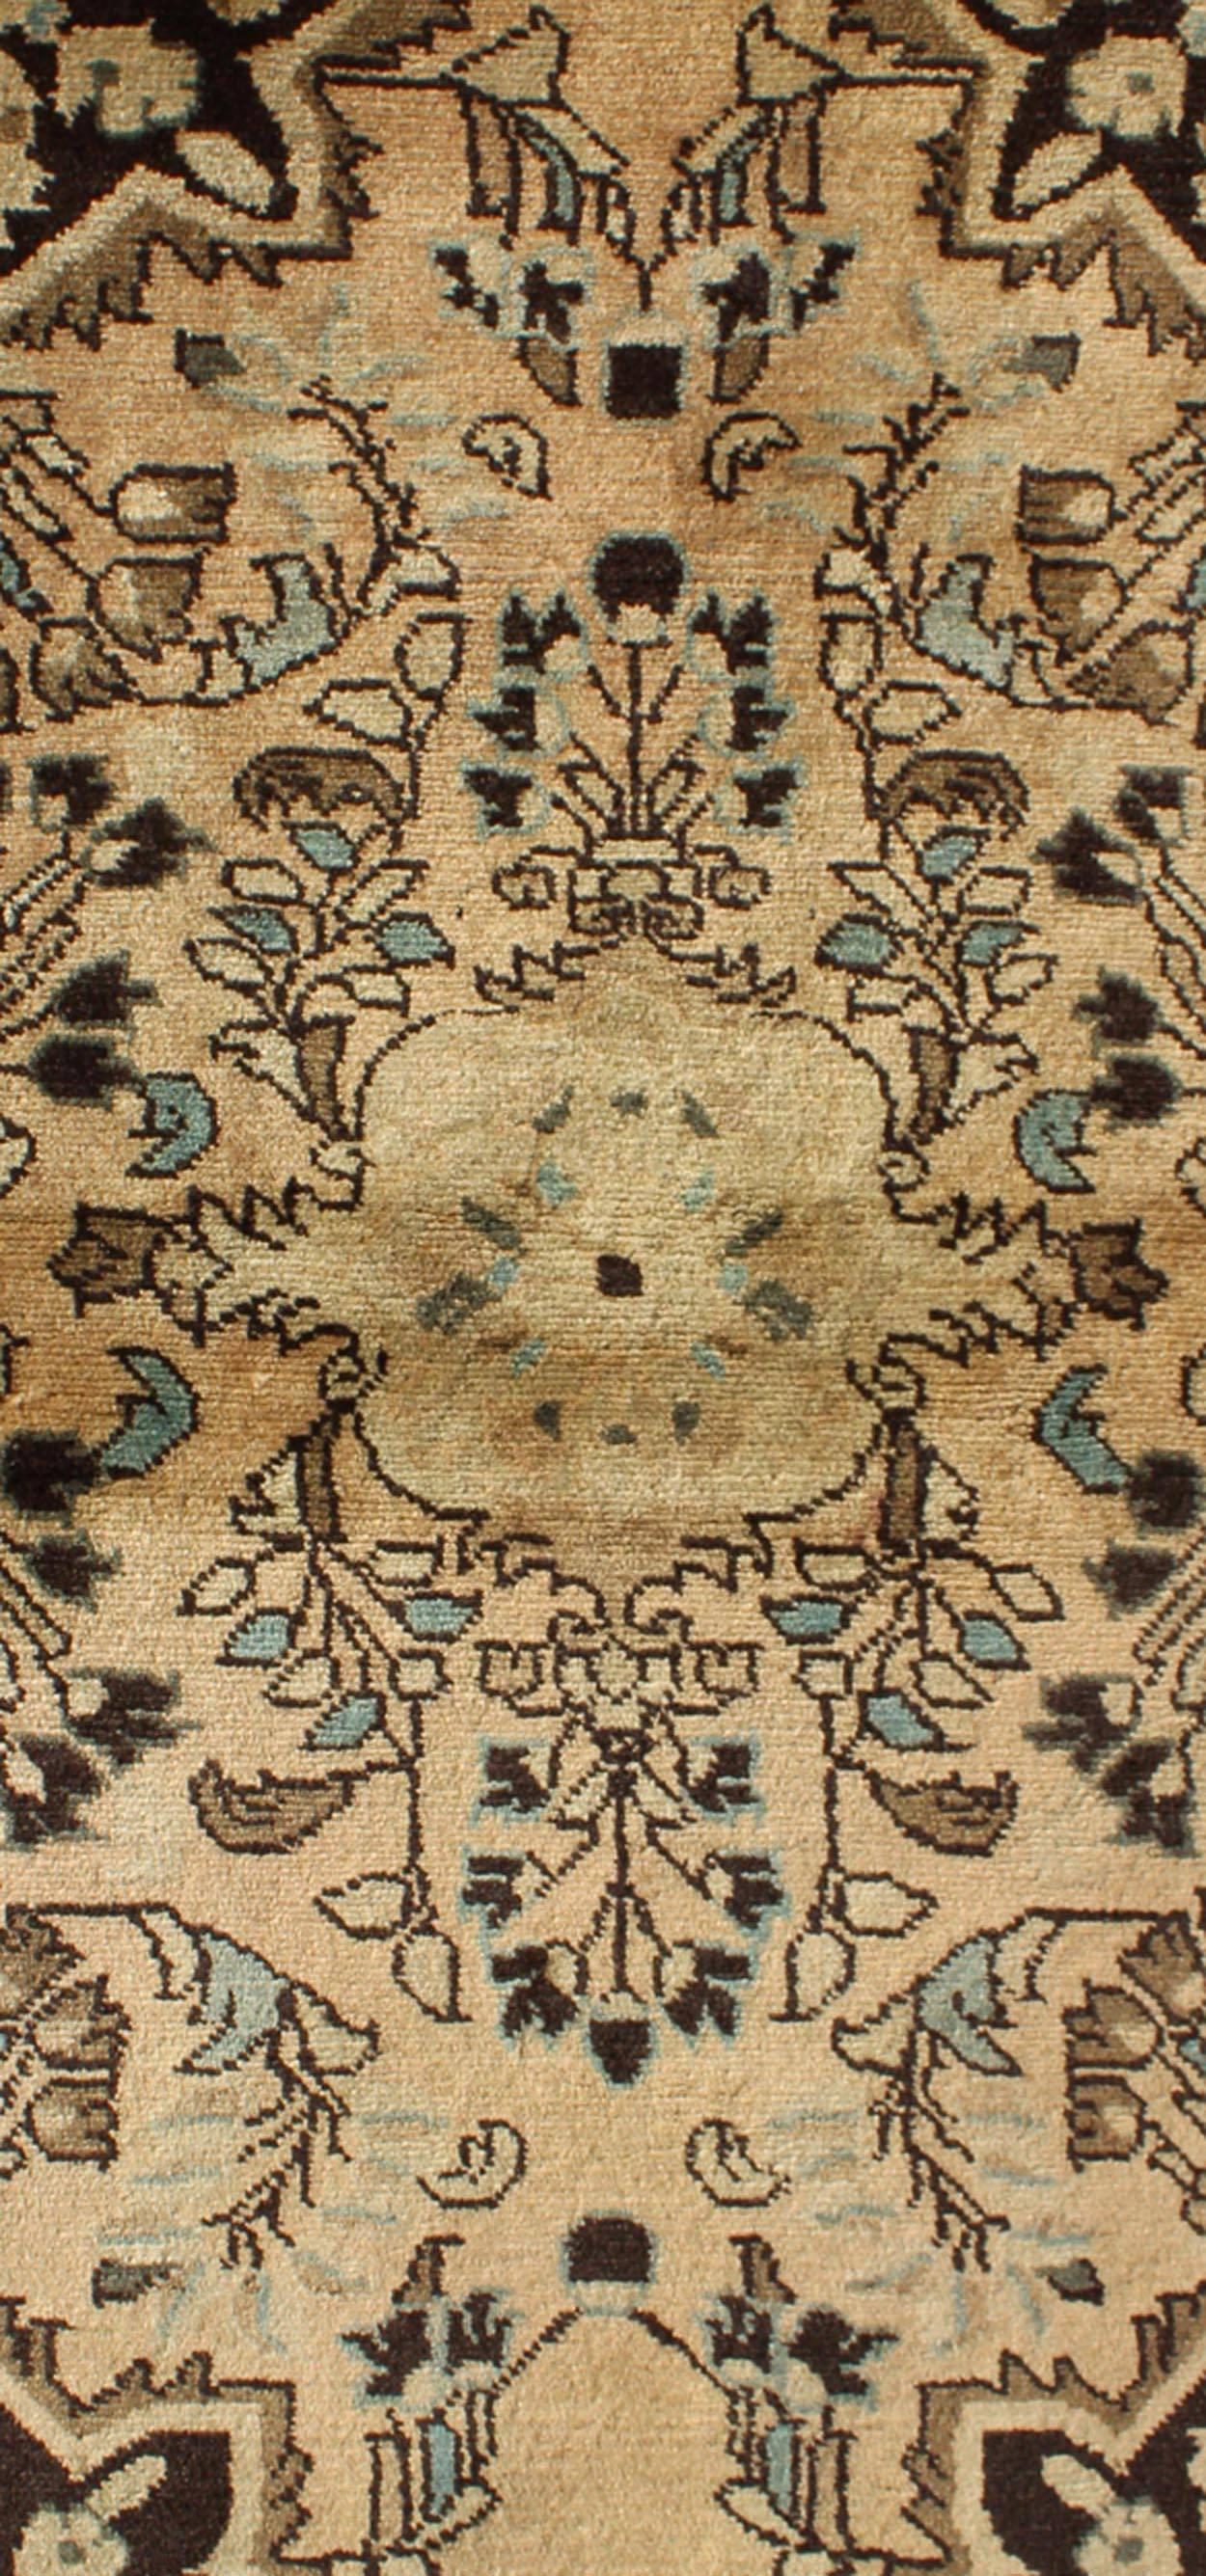 Hand-Knotted Vintage Persian Tabriz Rug with Center Medallion Design in Neutral Color Palette